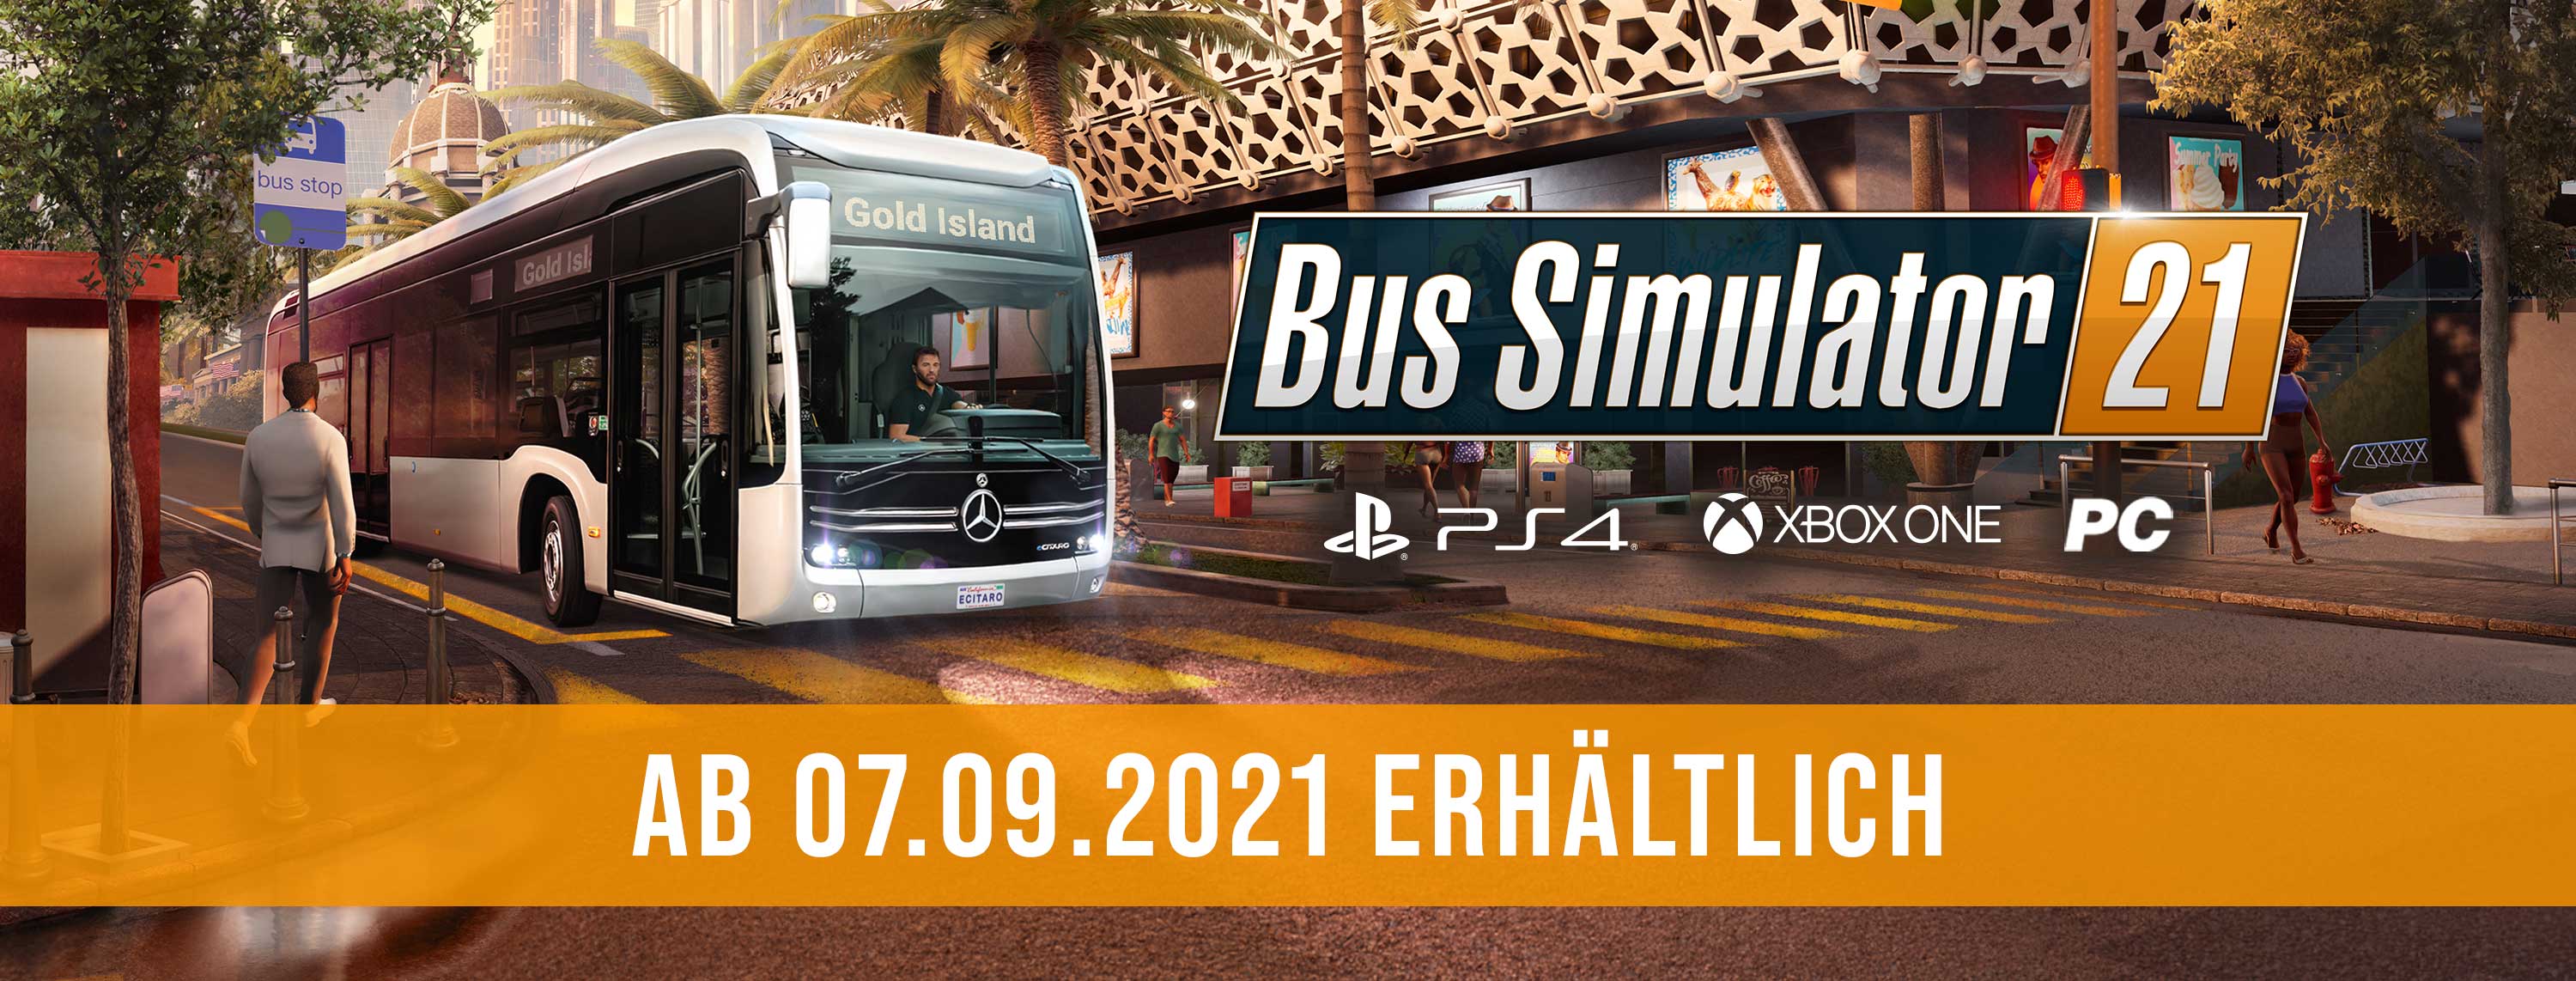 Bus Simulator News